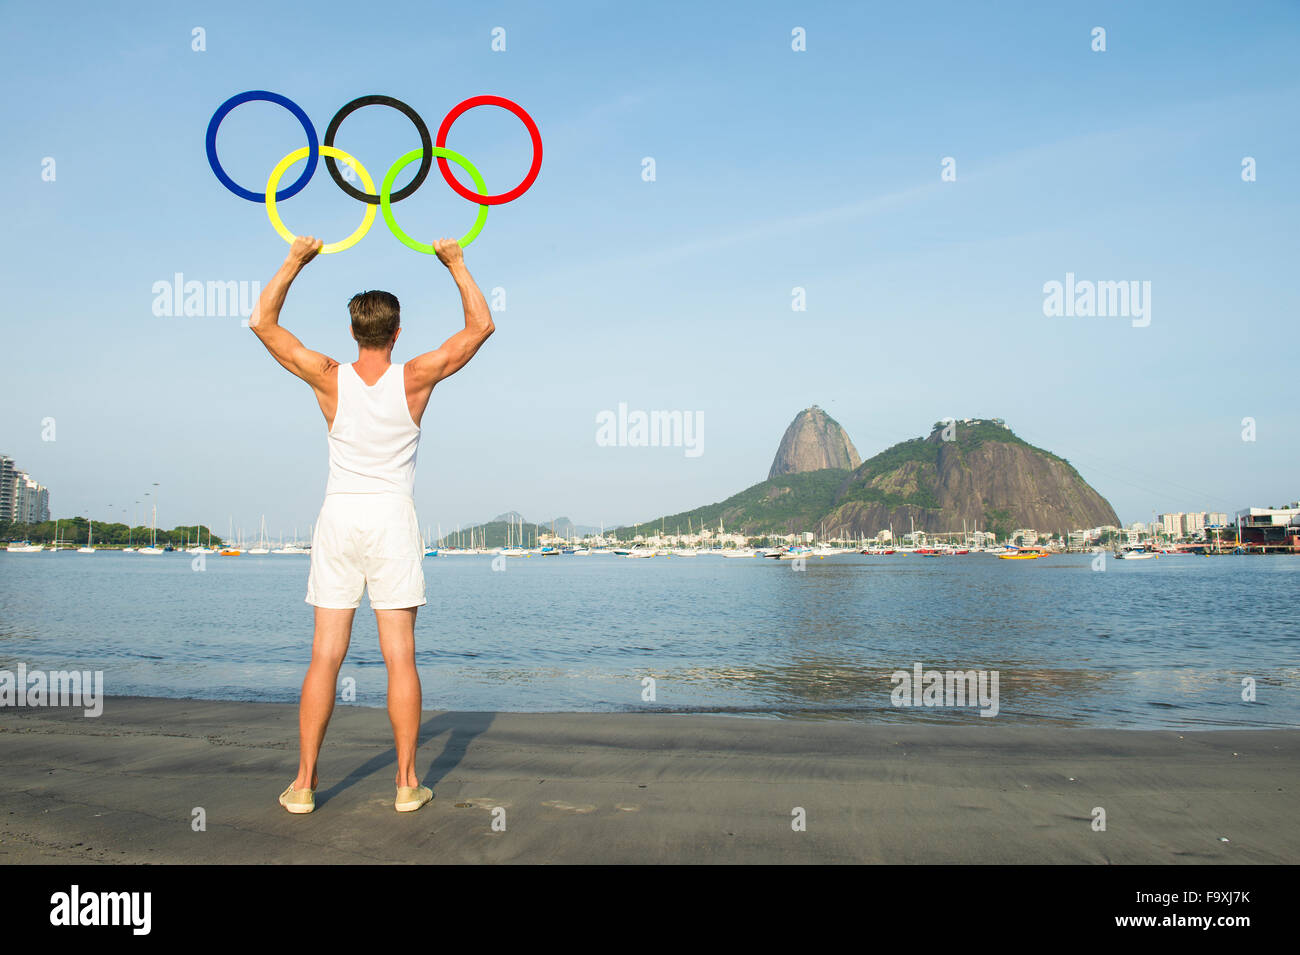 RIO DE JANEIRO, BRAZIL - NOVEMBER 10, 2015: Athlete holds Olympic rings on the shore of Botafogo Beach near Sugarloaf Mountain. Stock Photo